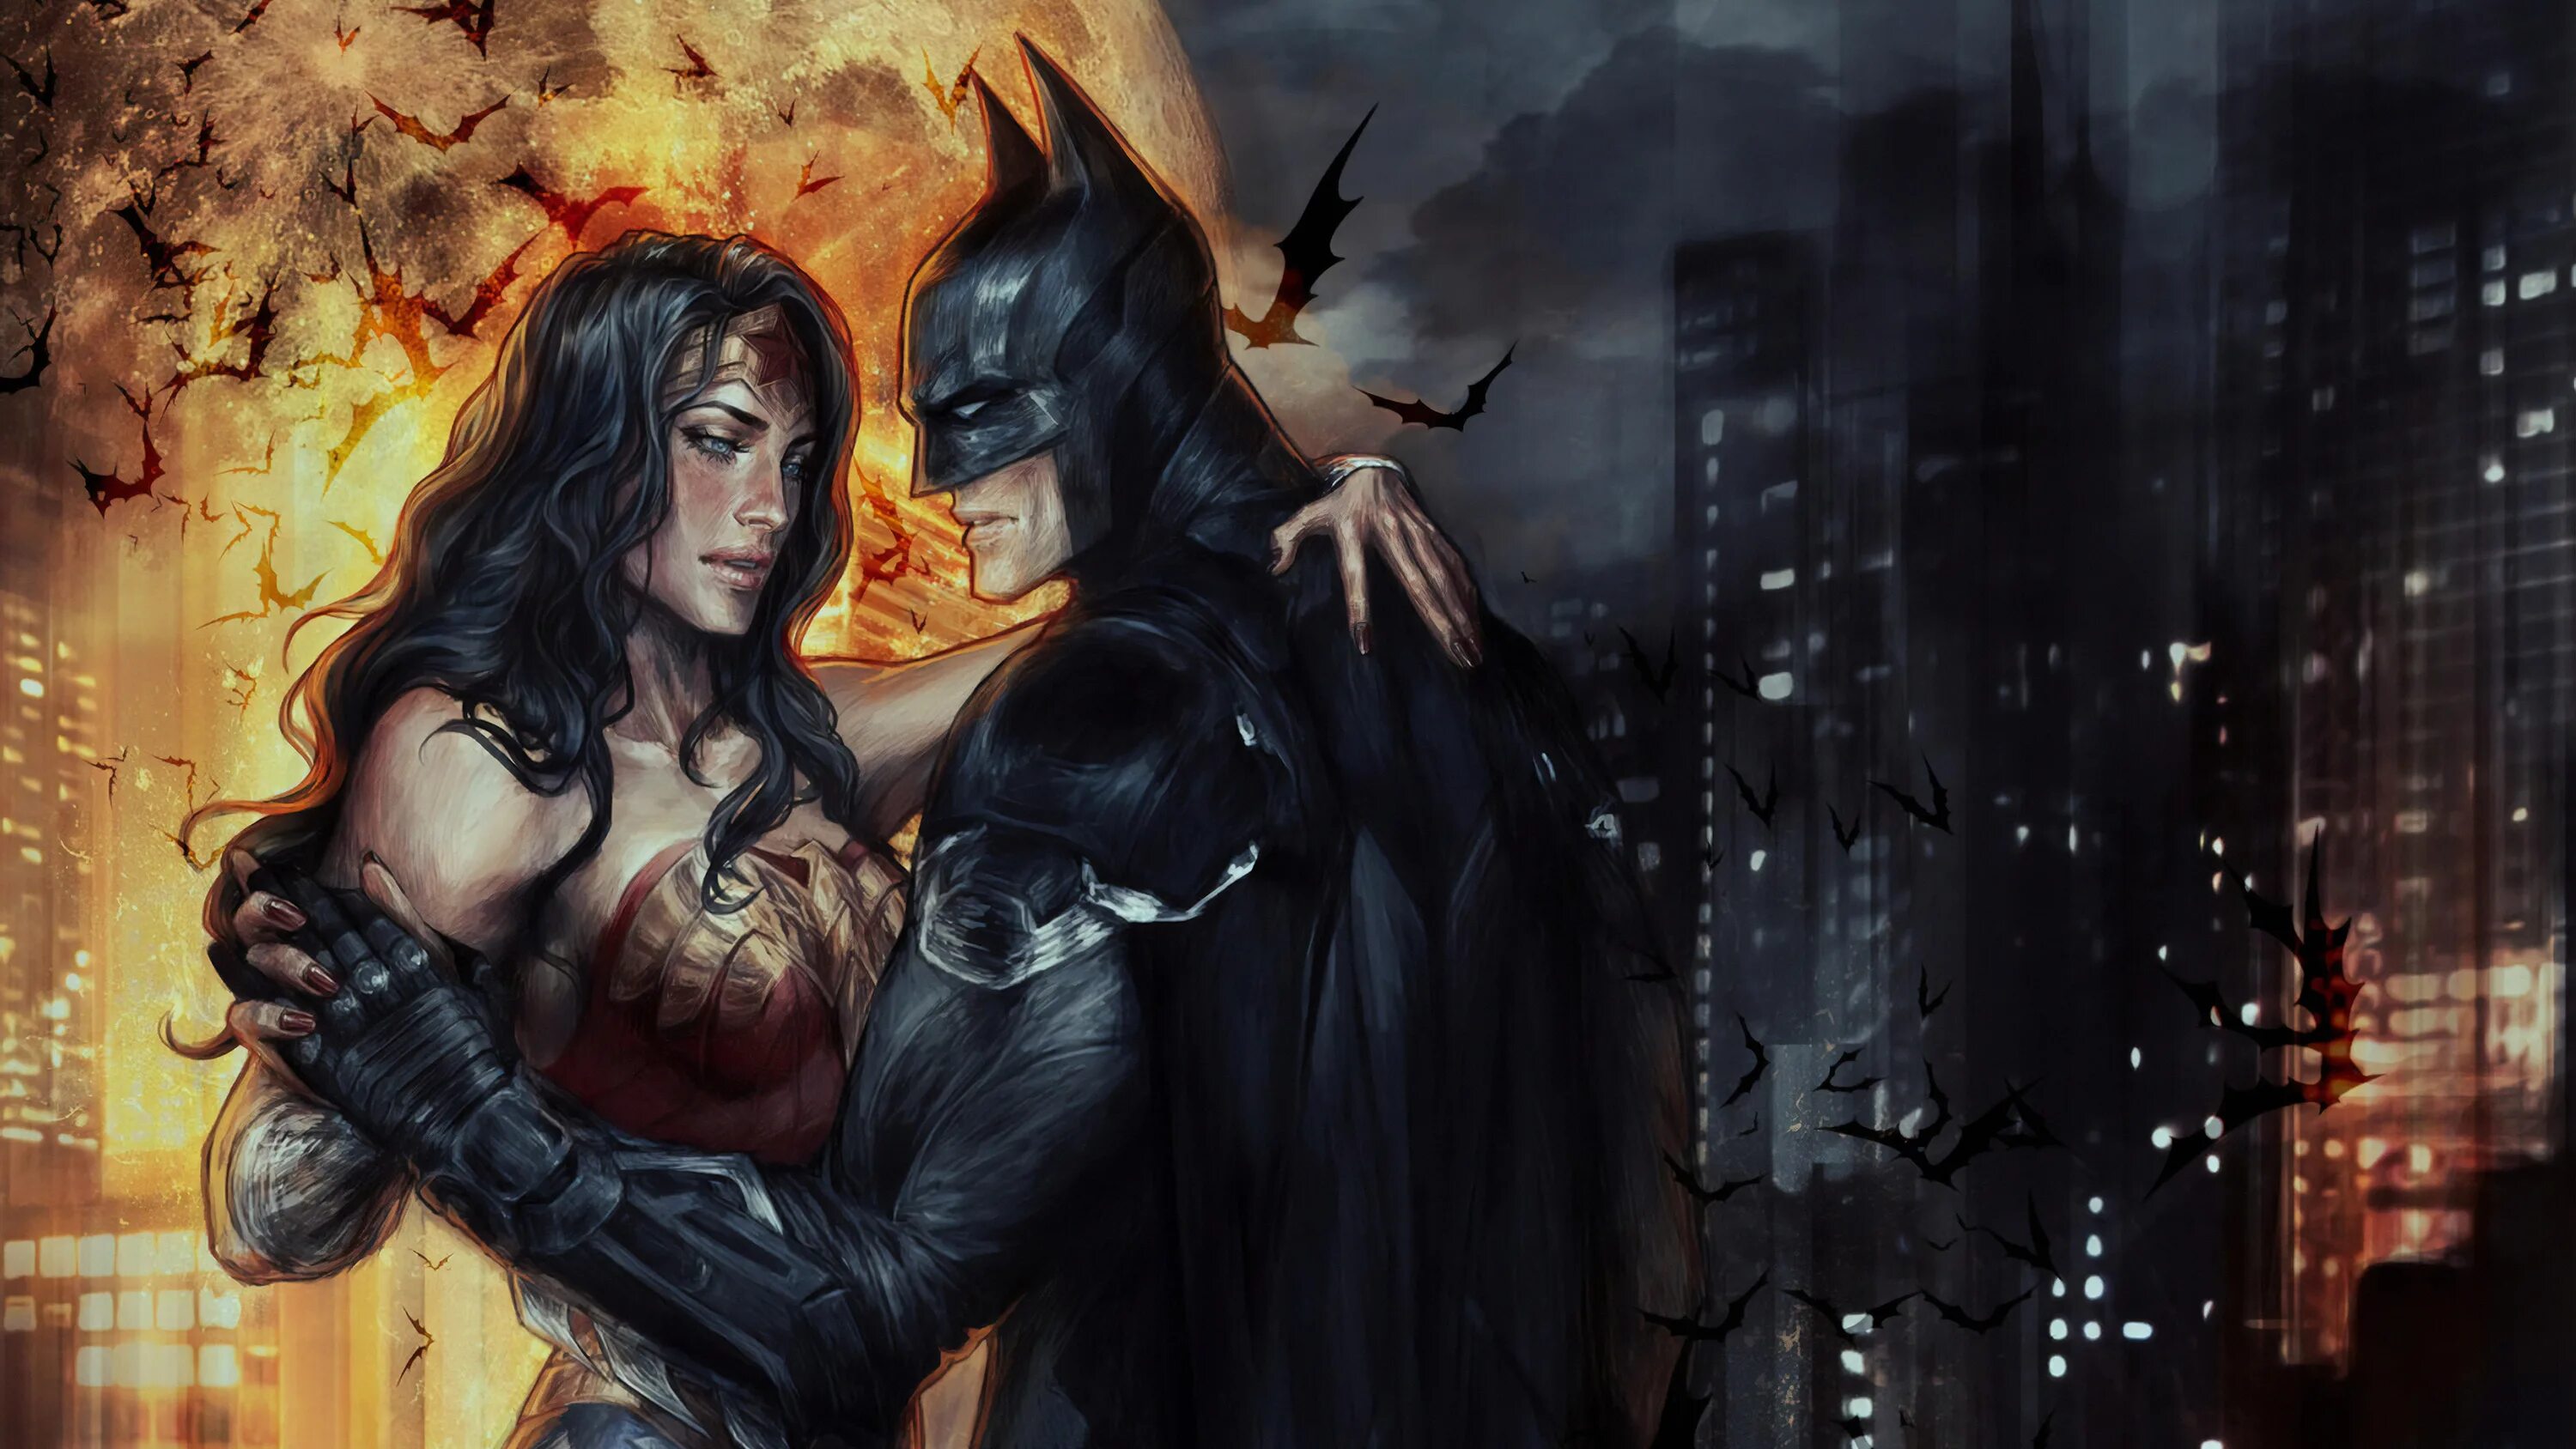 Бэтмен и Вандер Вумен. Бэтмен и чудо женщина. Бэтмен и чудо женщина поцелуй. Бэтмен против чудо женщины.